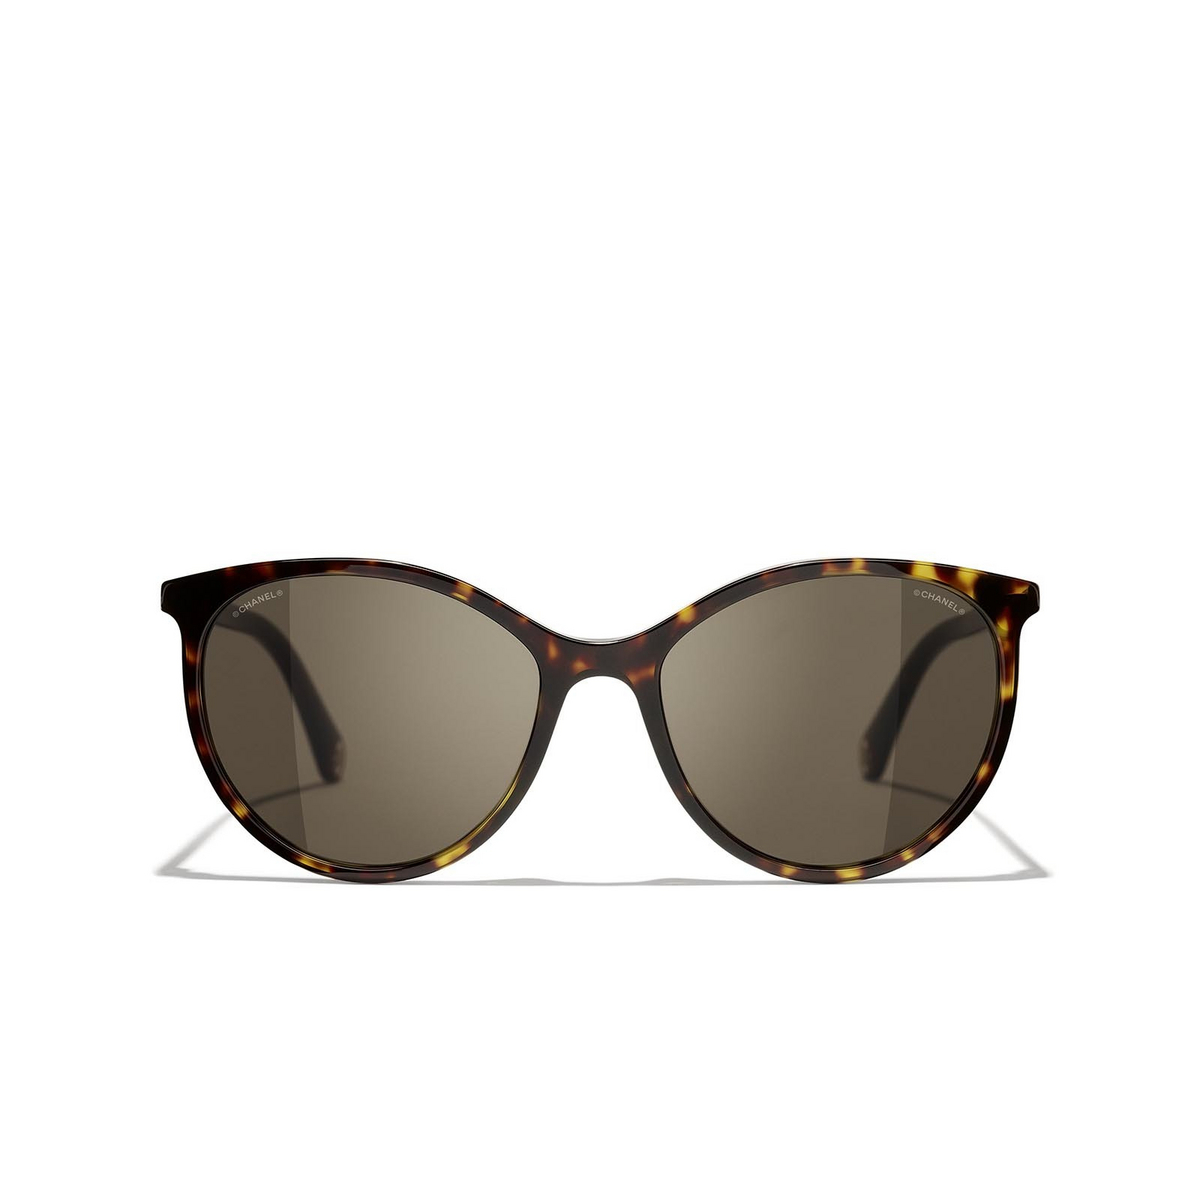 CHANEL pantos Sunglasses C714/3 Dark Tortoise - front view